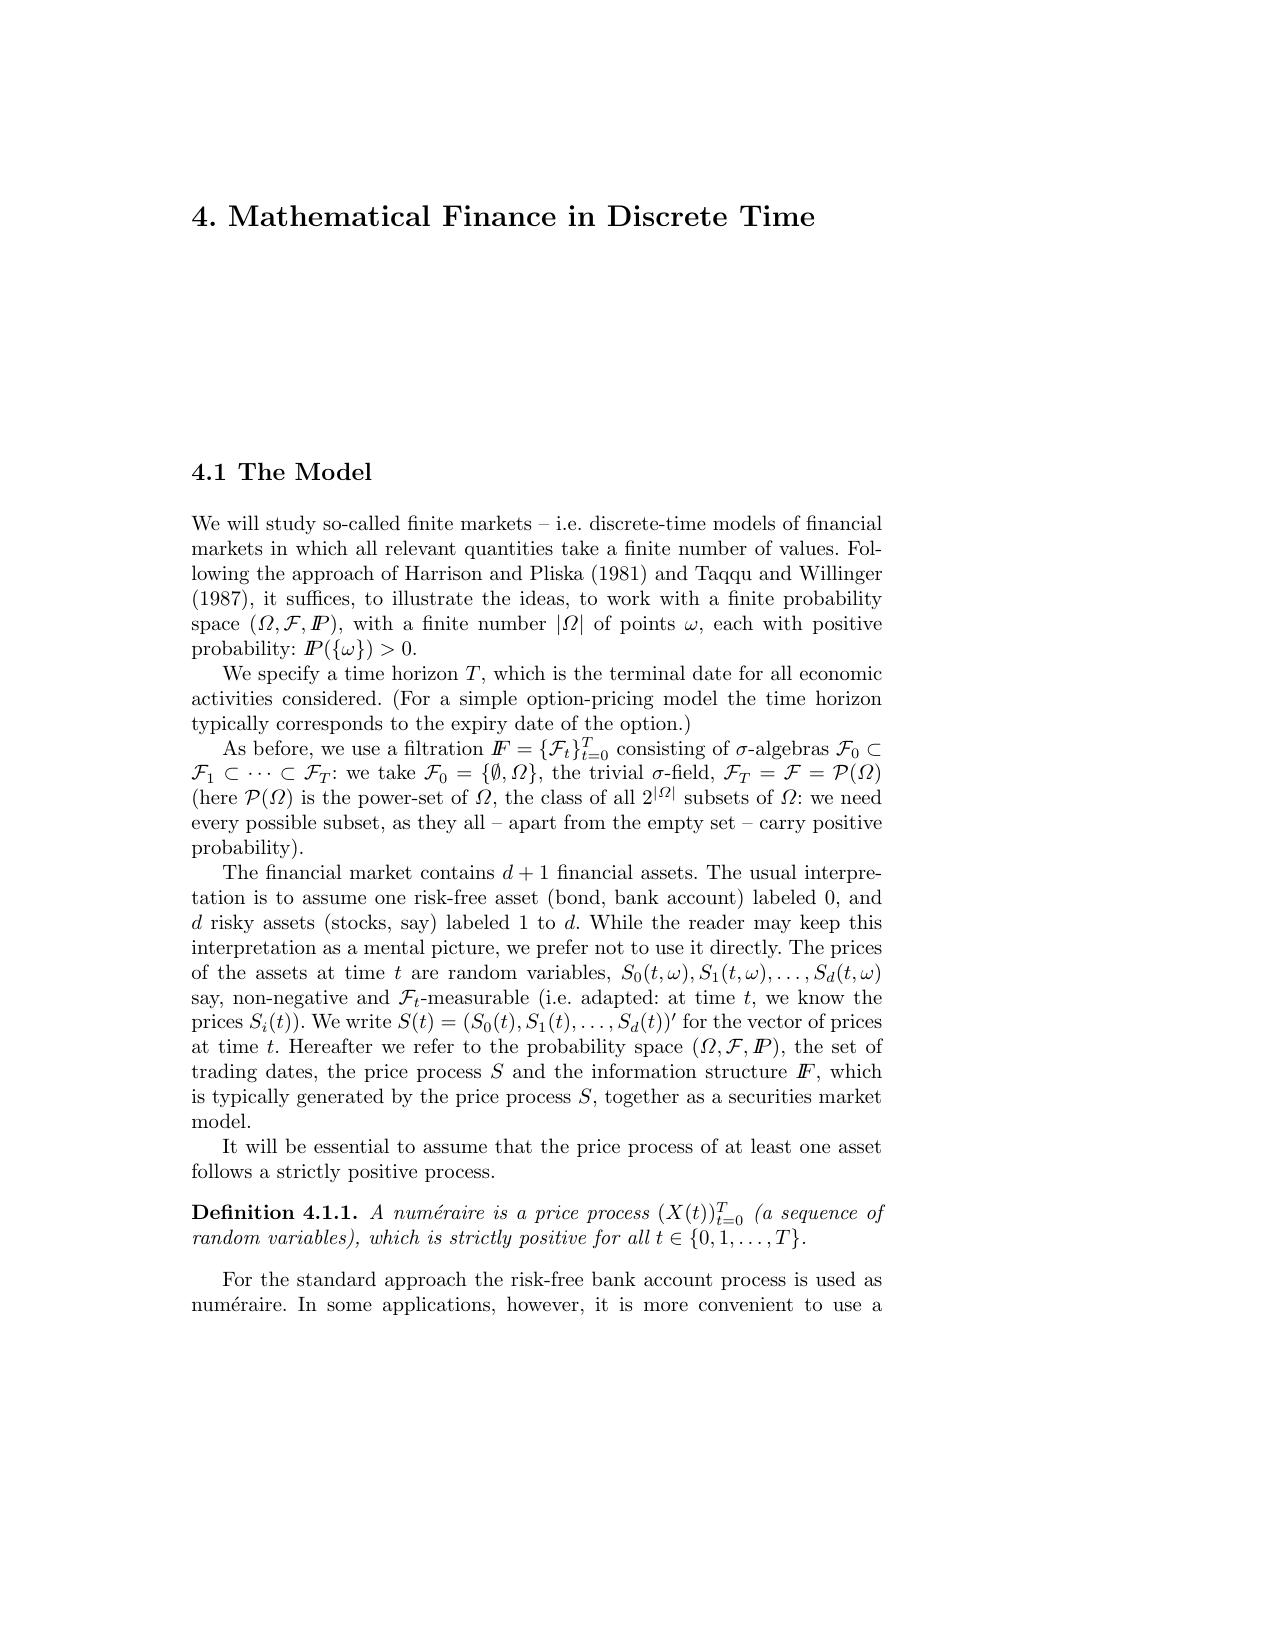 Mathematical Finance in Discrete Time, 2017